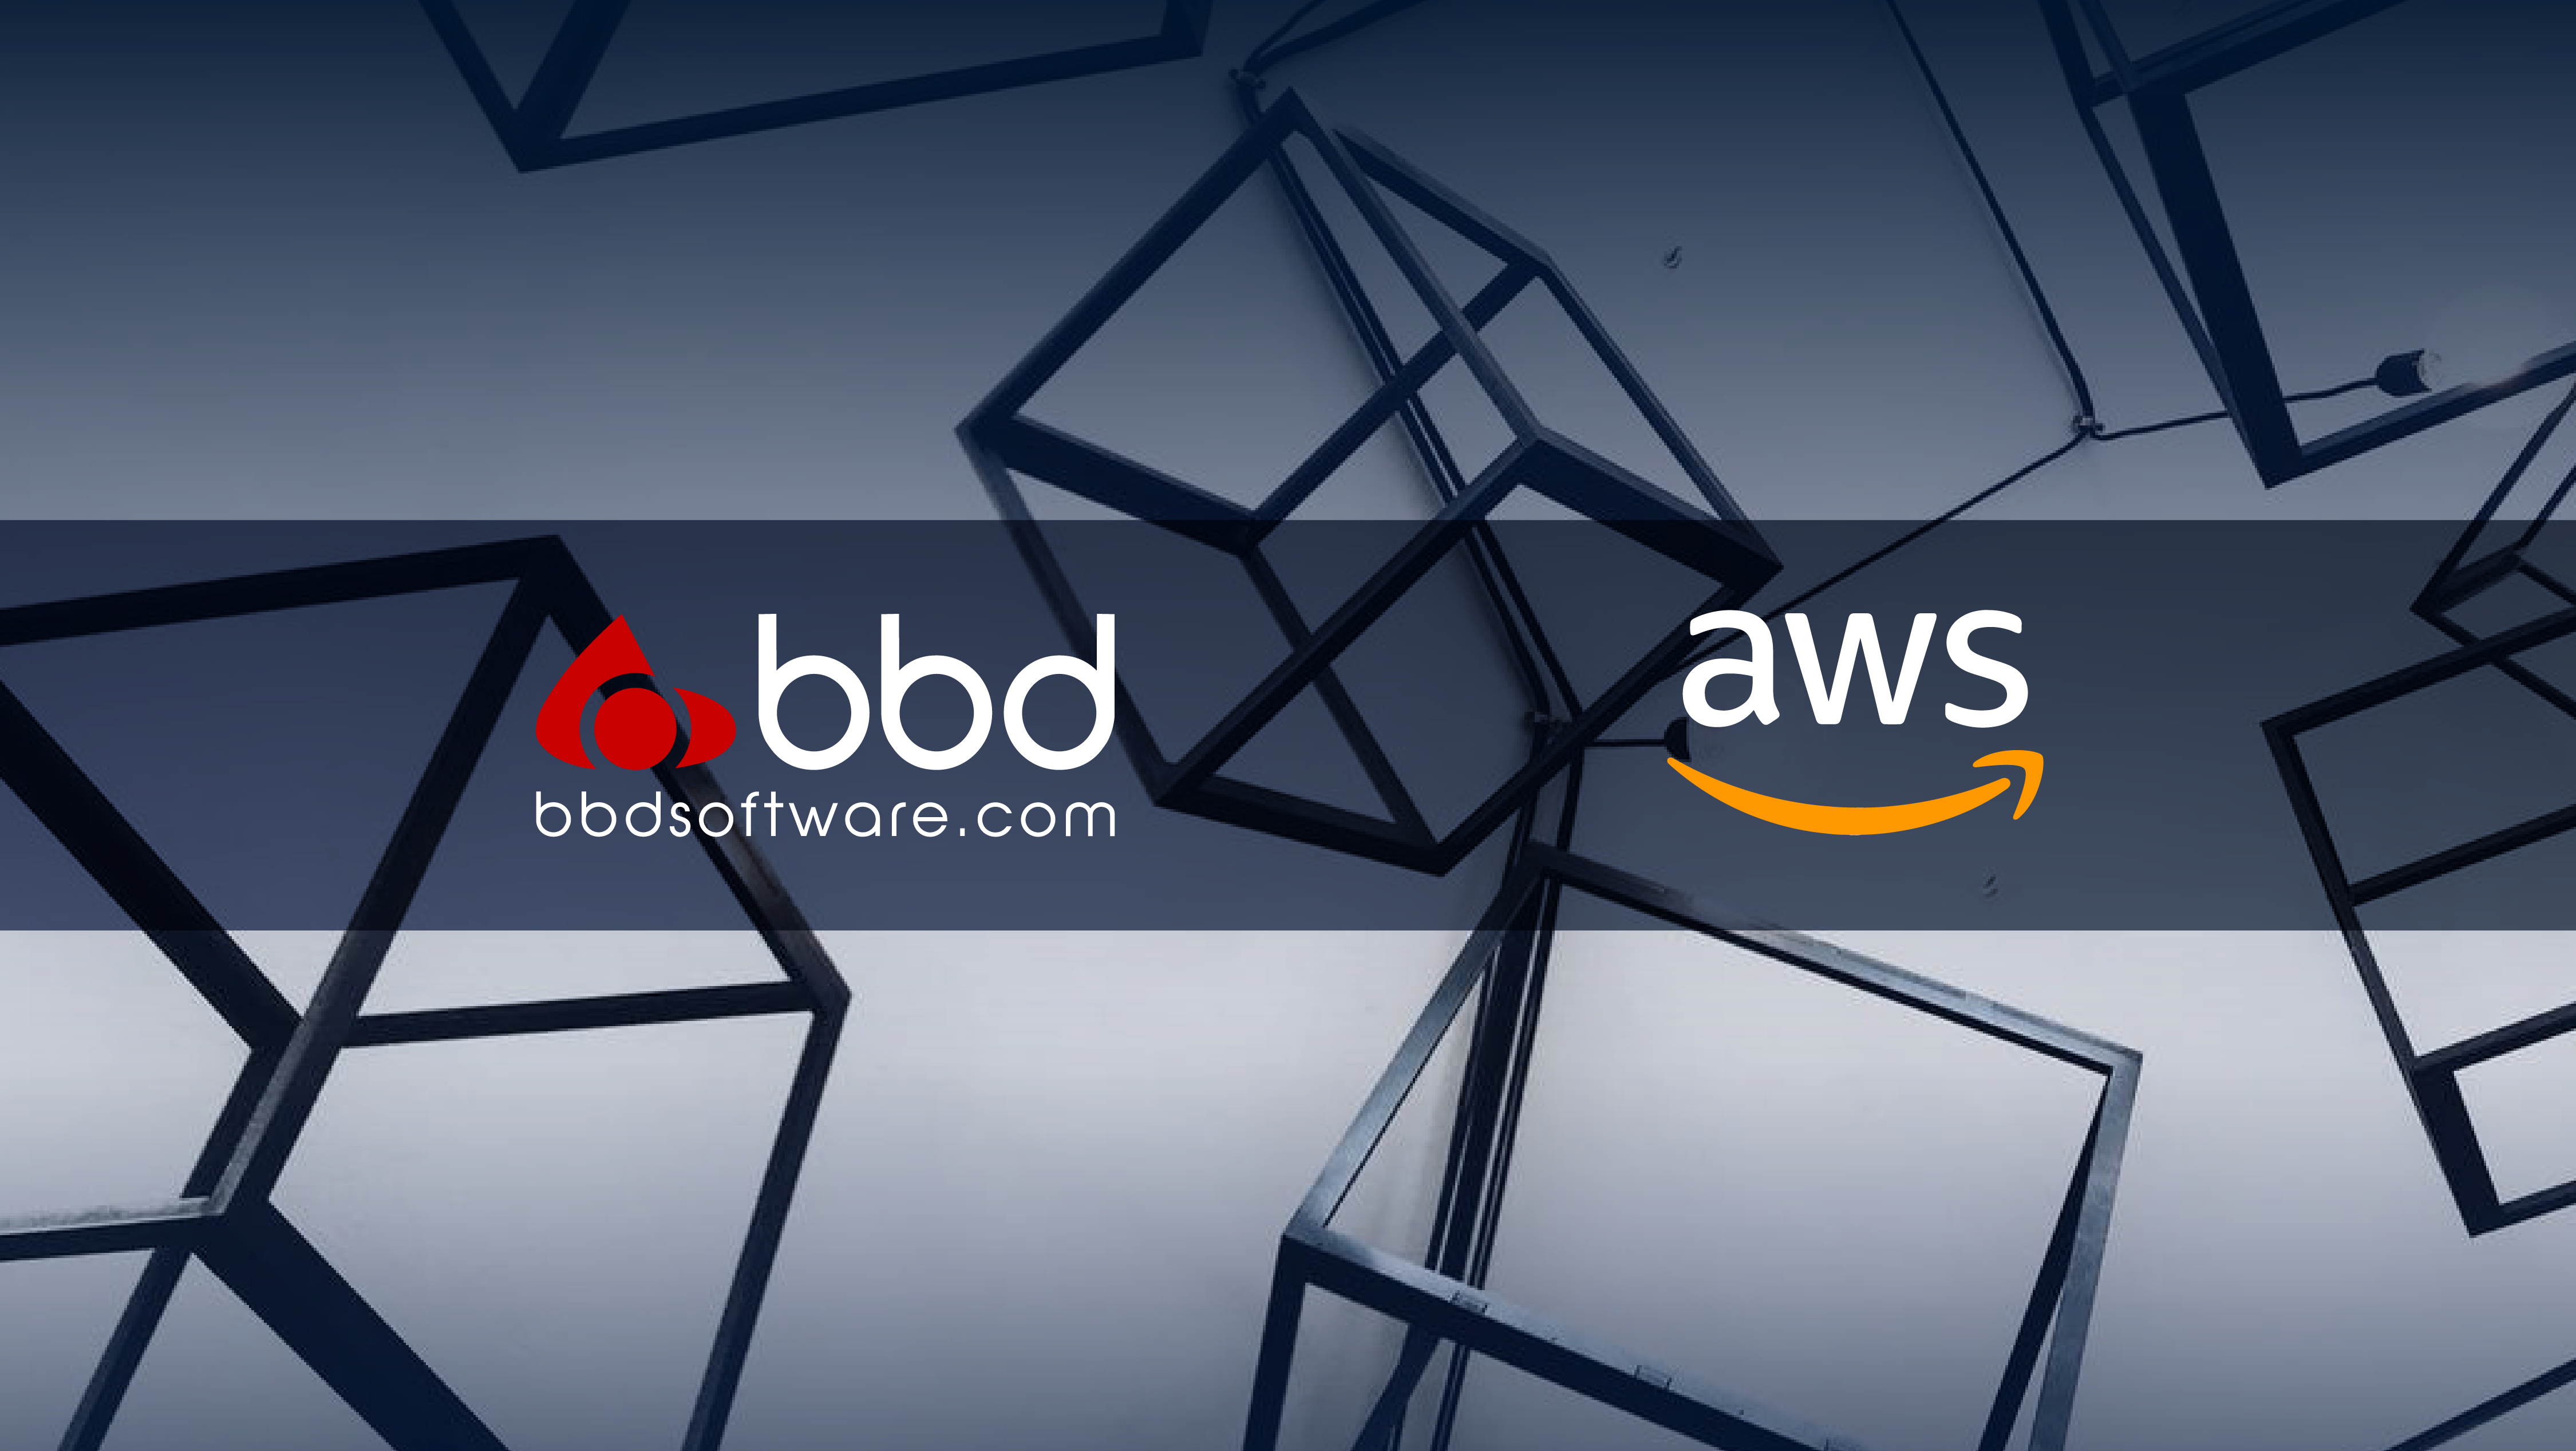 BBD achieves AWS Advanced Partner status